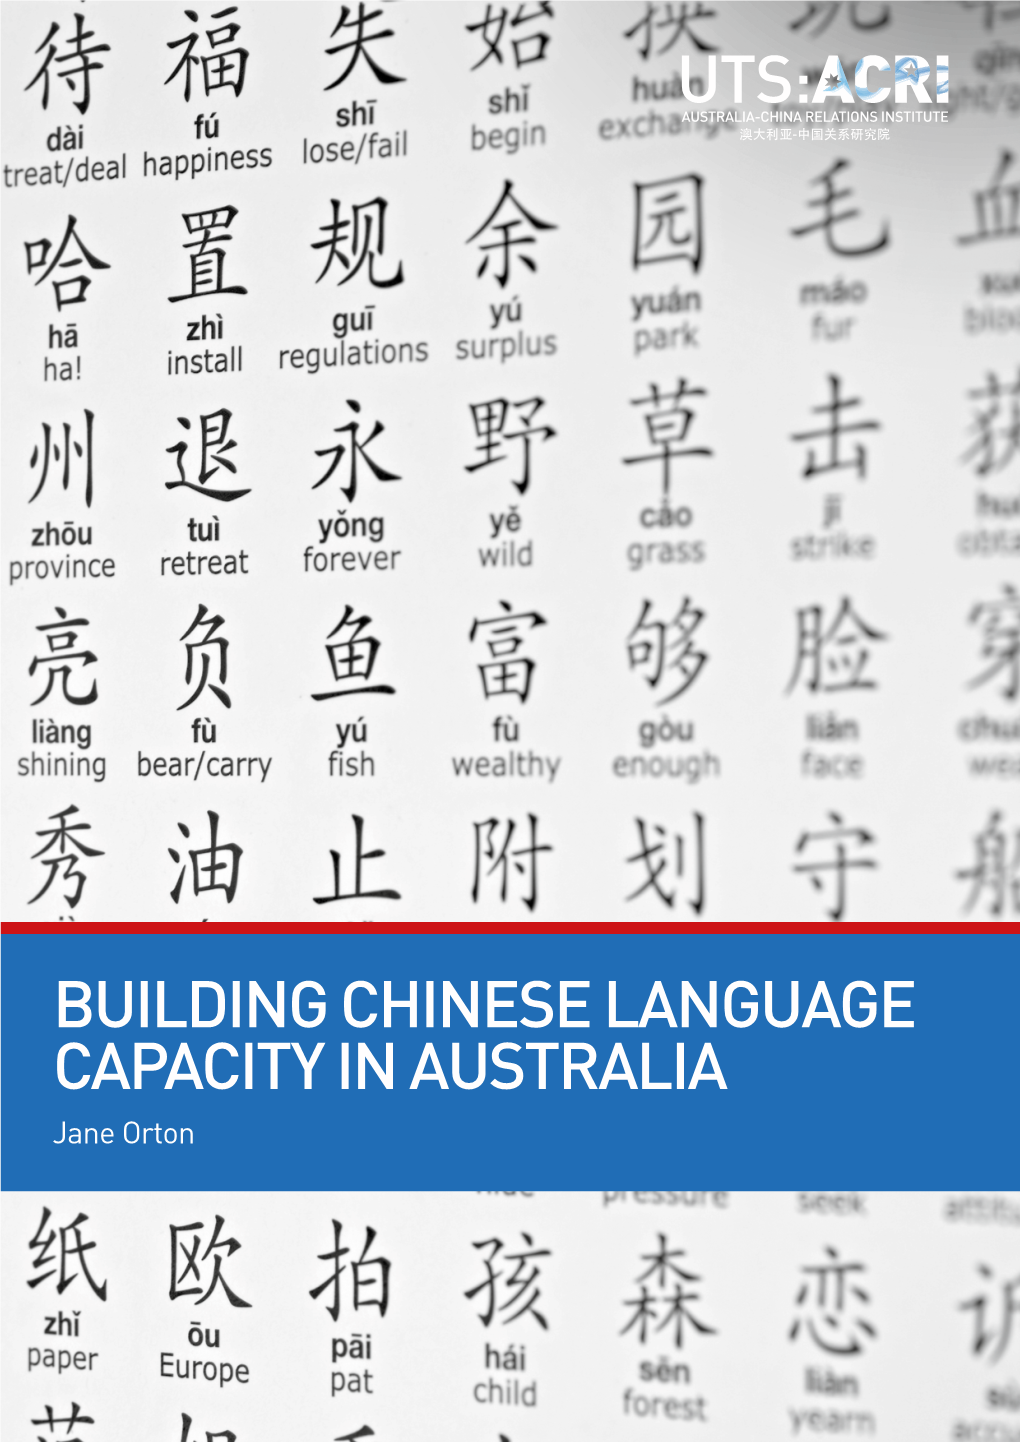 BUILDING CHINESE LANGUAGE CAPACITY in AUSTRALIA Jane Orton FRONT COVER IMAGE: Thinkstock